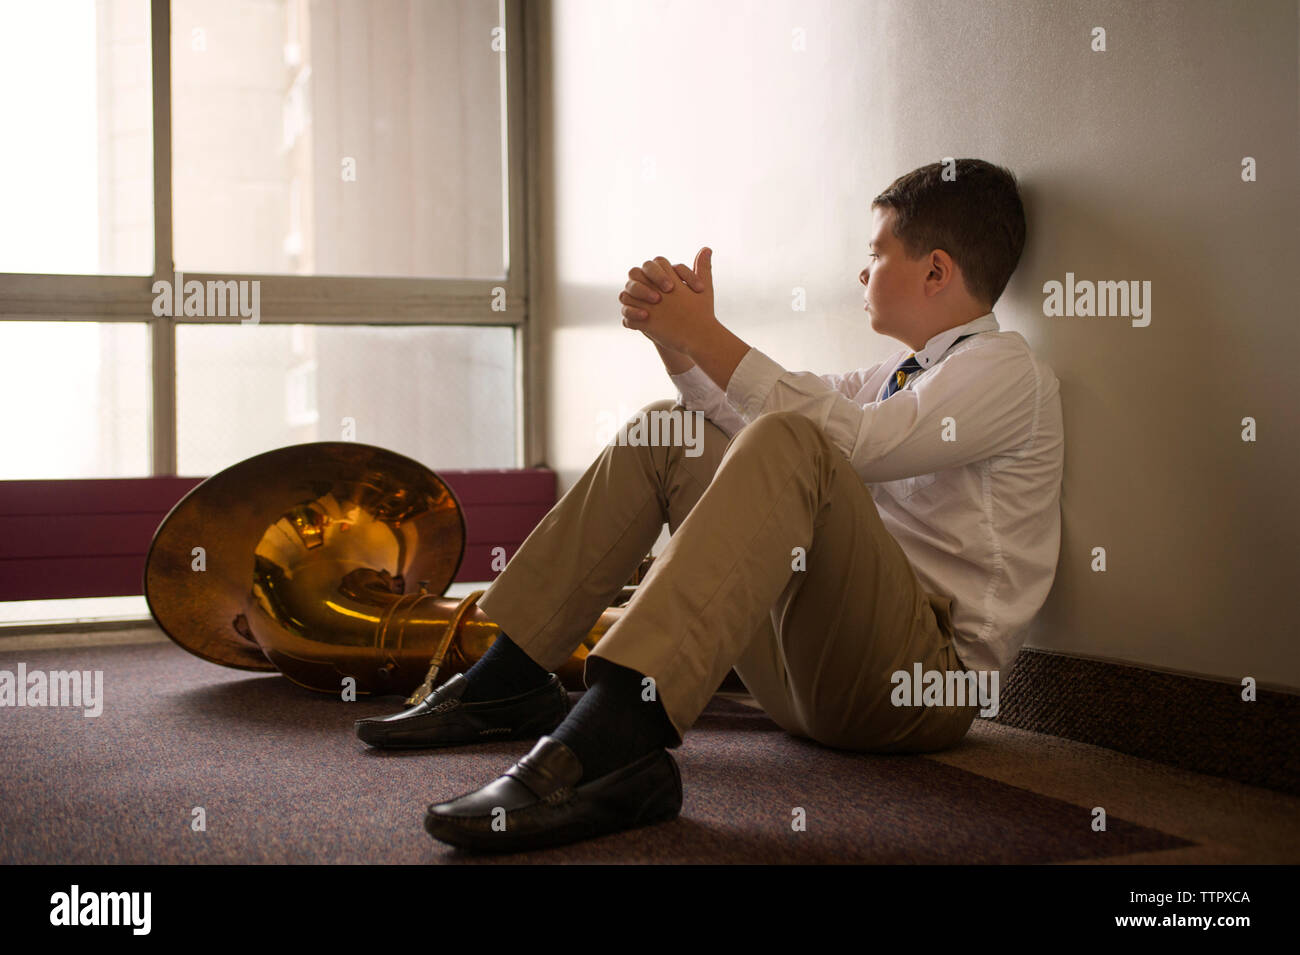 Thoughtful boy sitting by tuba on floor Stock Photo